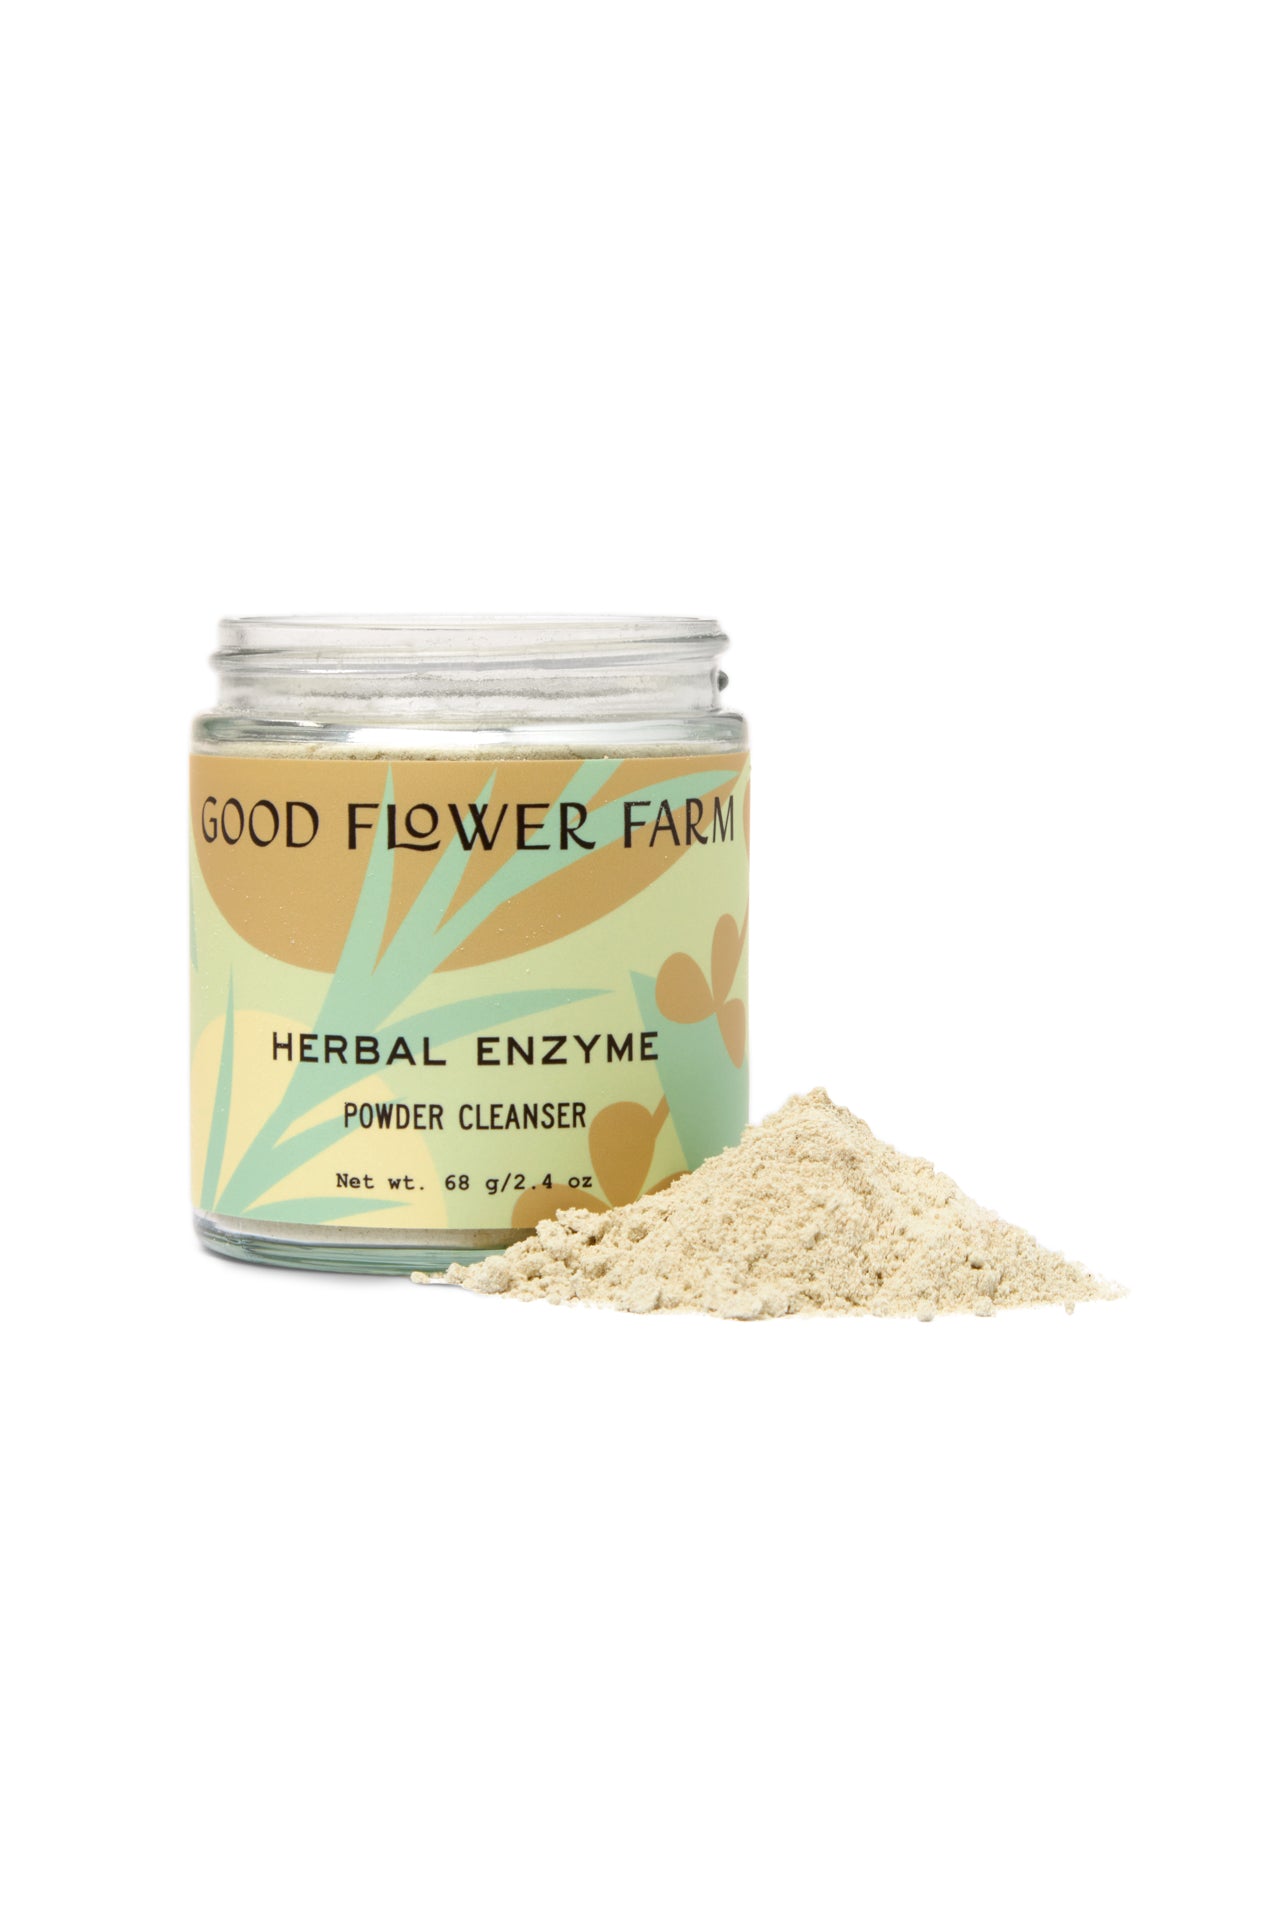 Herbal Enzyme Powder Cleanser by Good Flower Farm